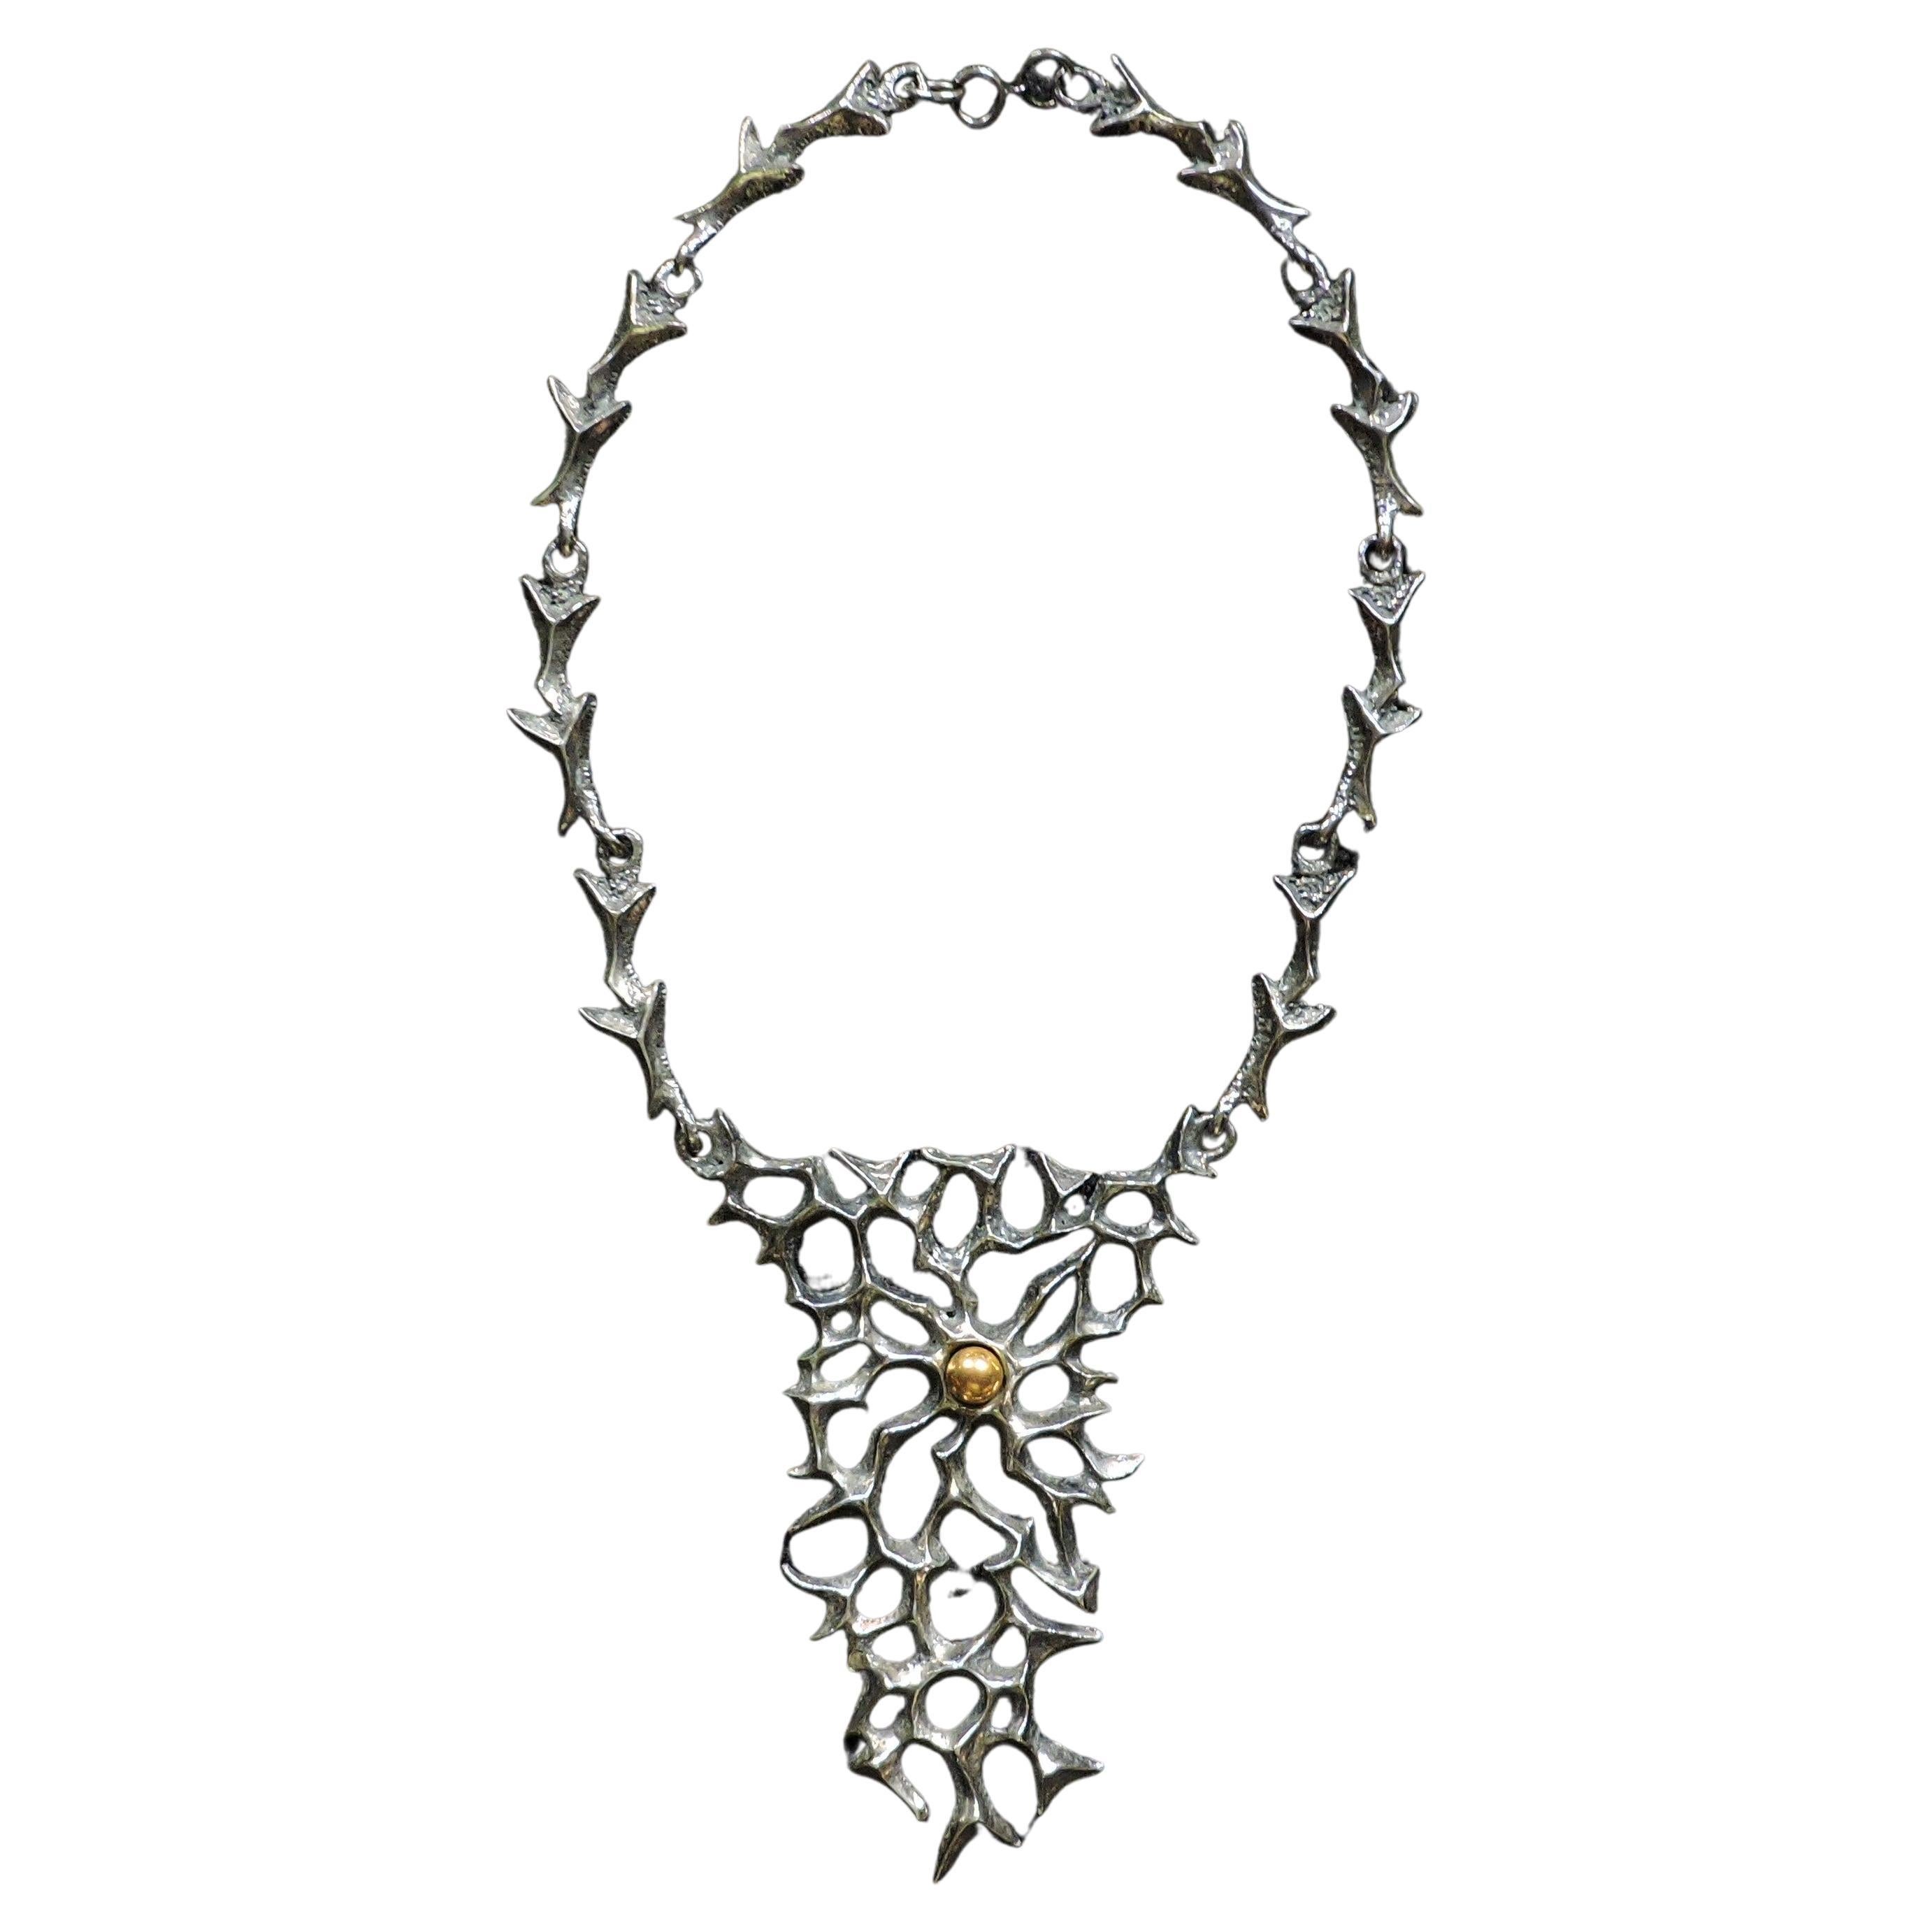 Robert Larin Brutalist Modernist Sculptural Bib Necklace, Canadian Art Jewelry